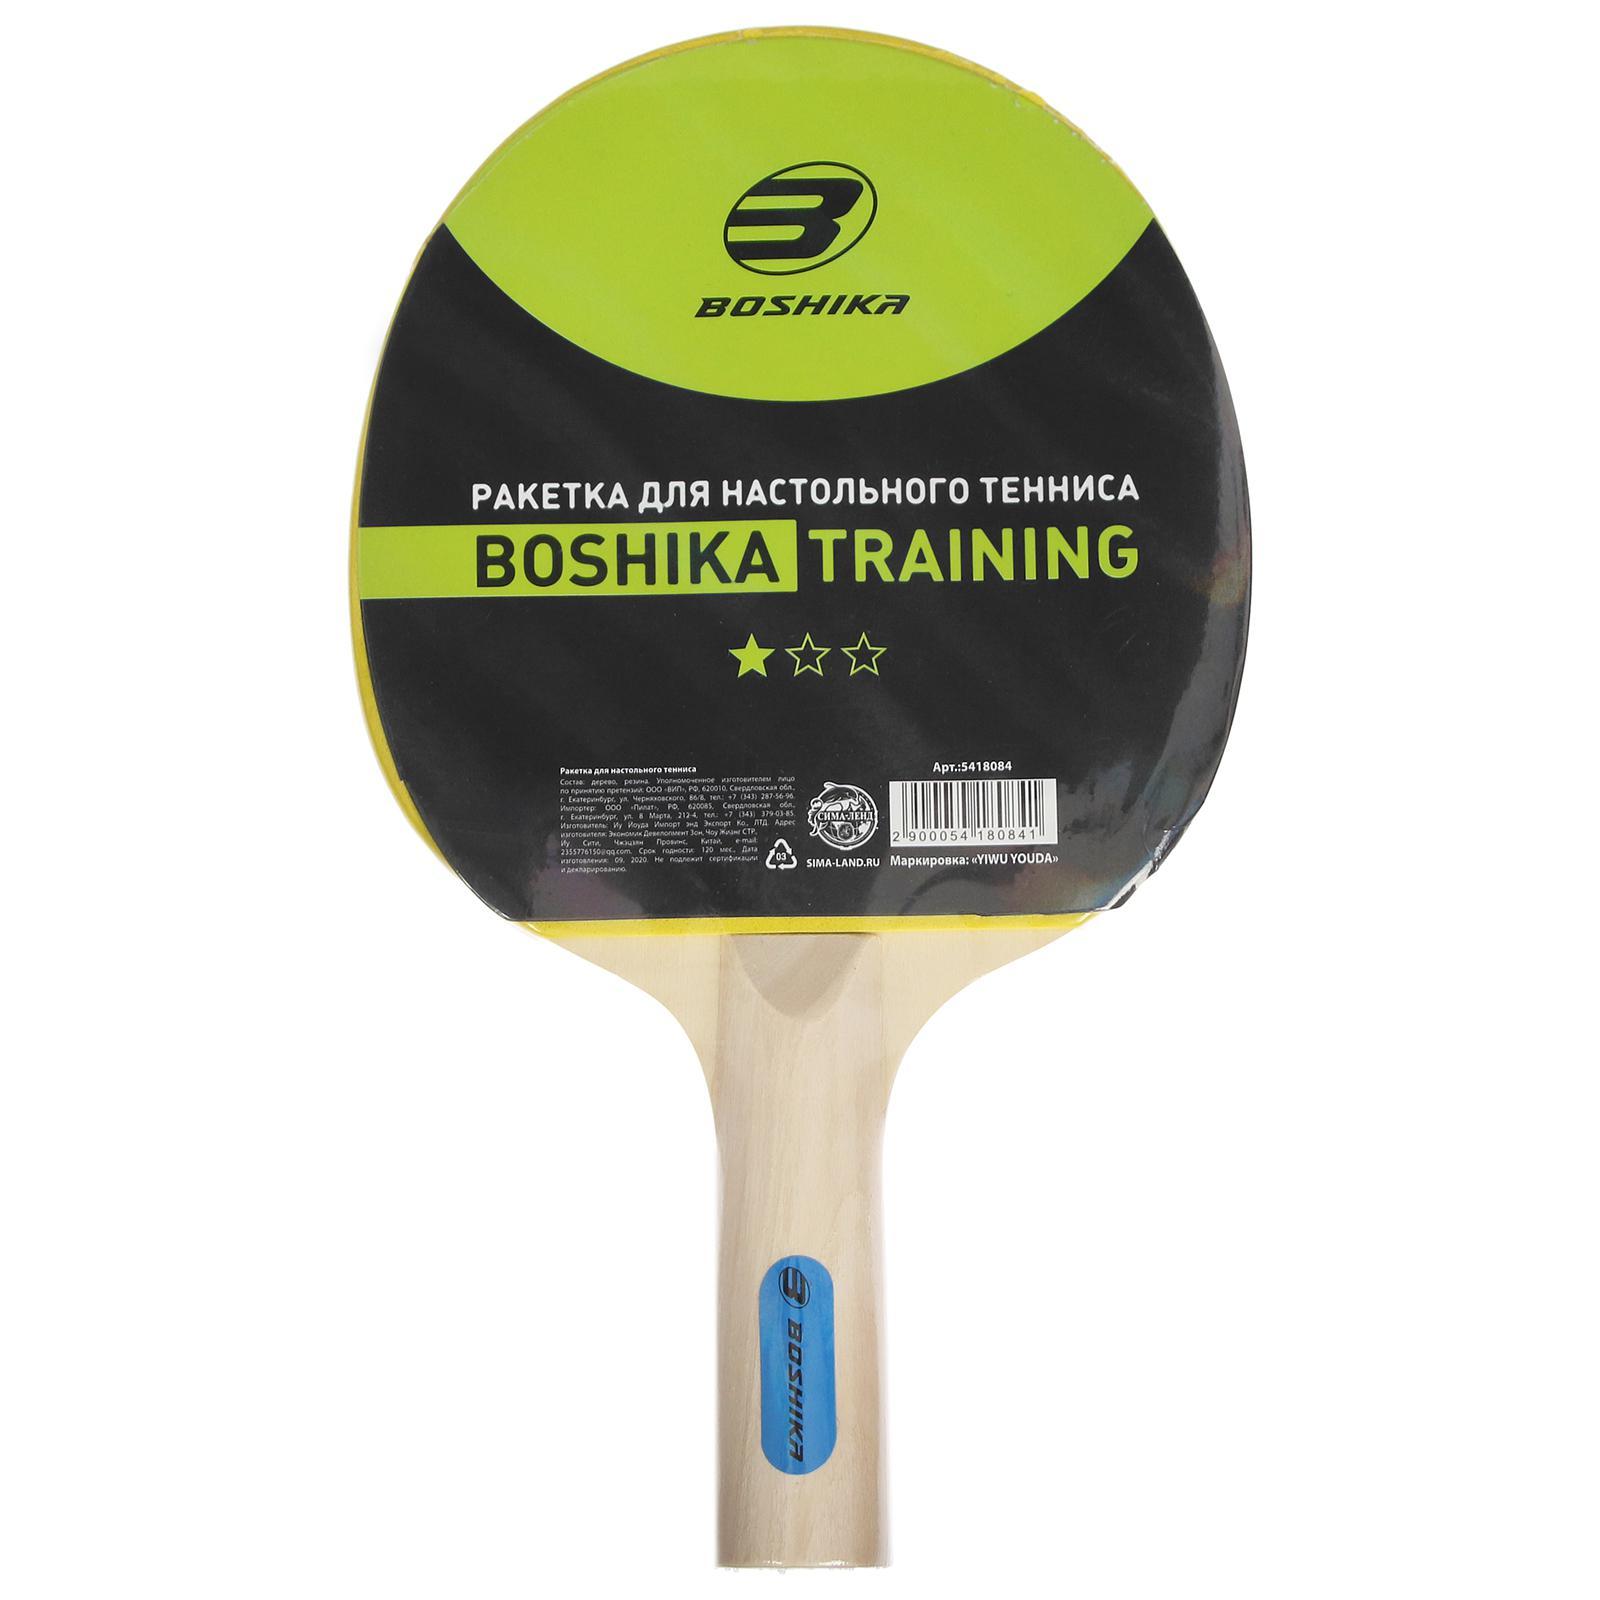 Ракетка для настольного тенниса BOSHIKA Training 5418084